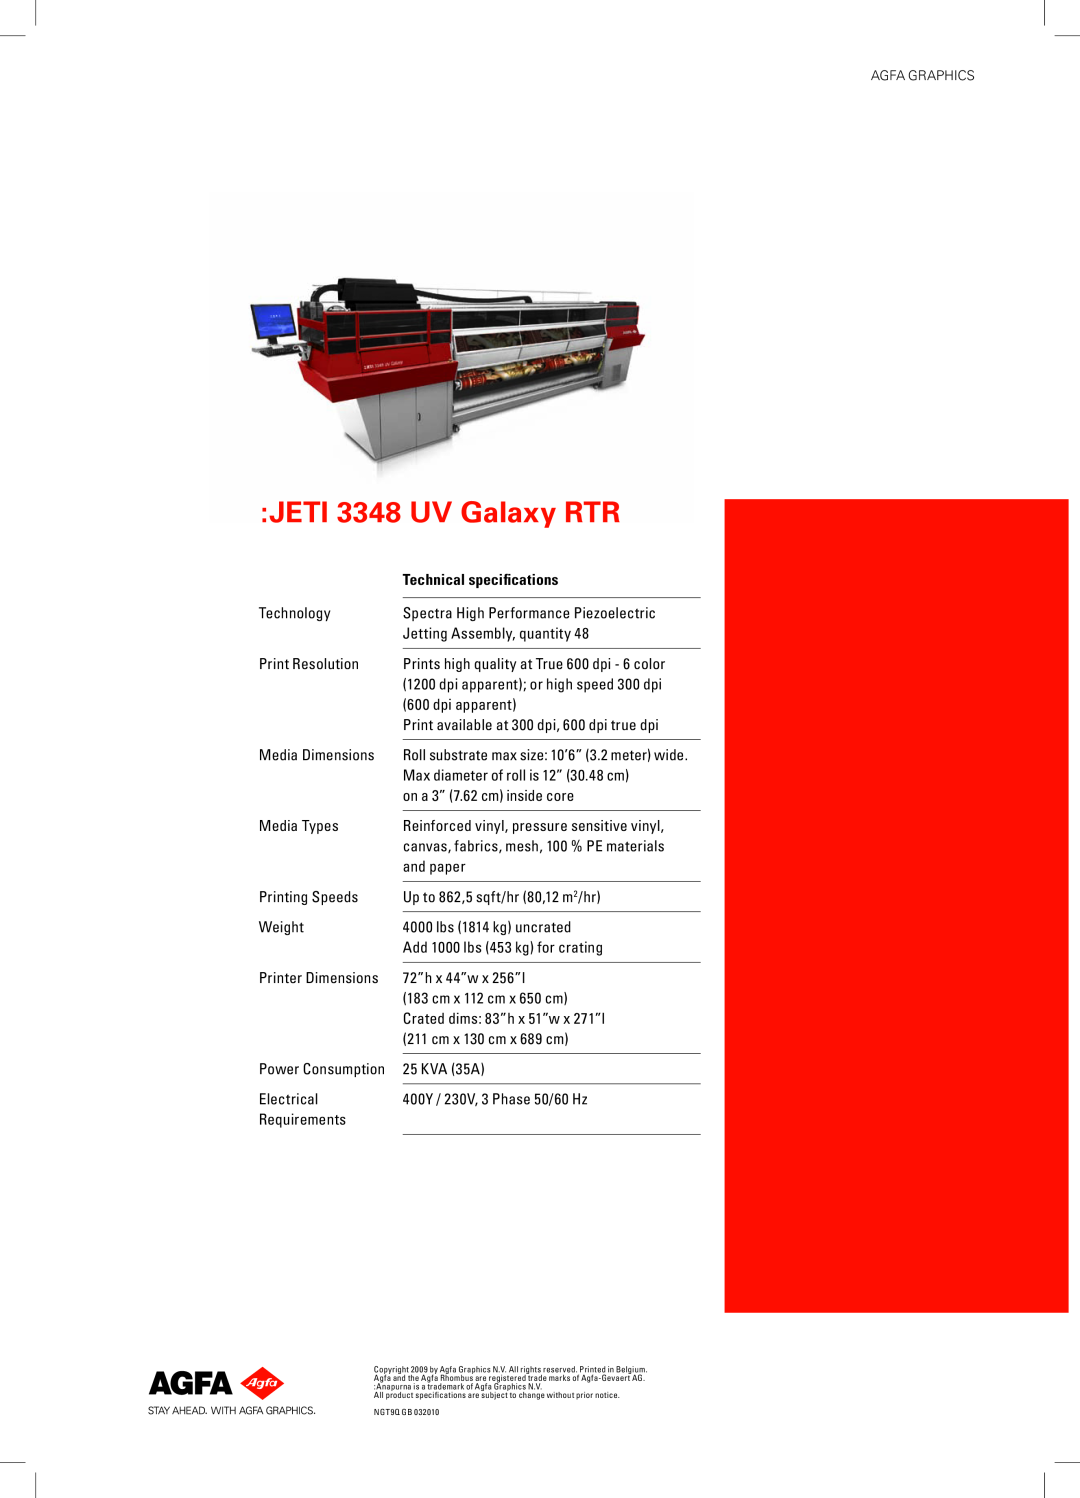 AGFA manual JETI 3348 UV Galaxy RTR, Technical specifications 